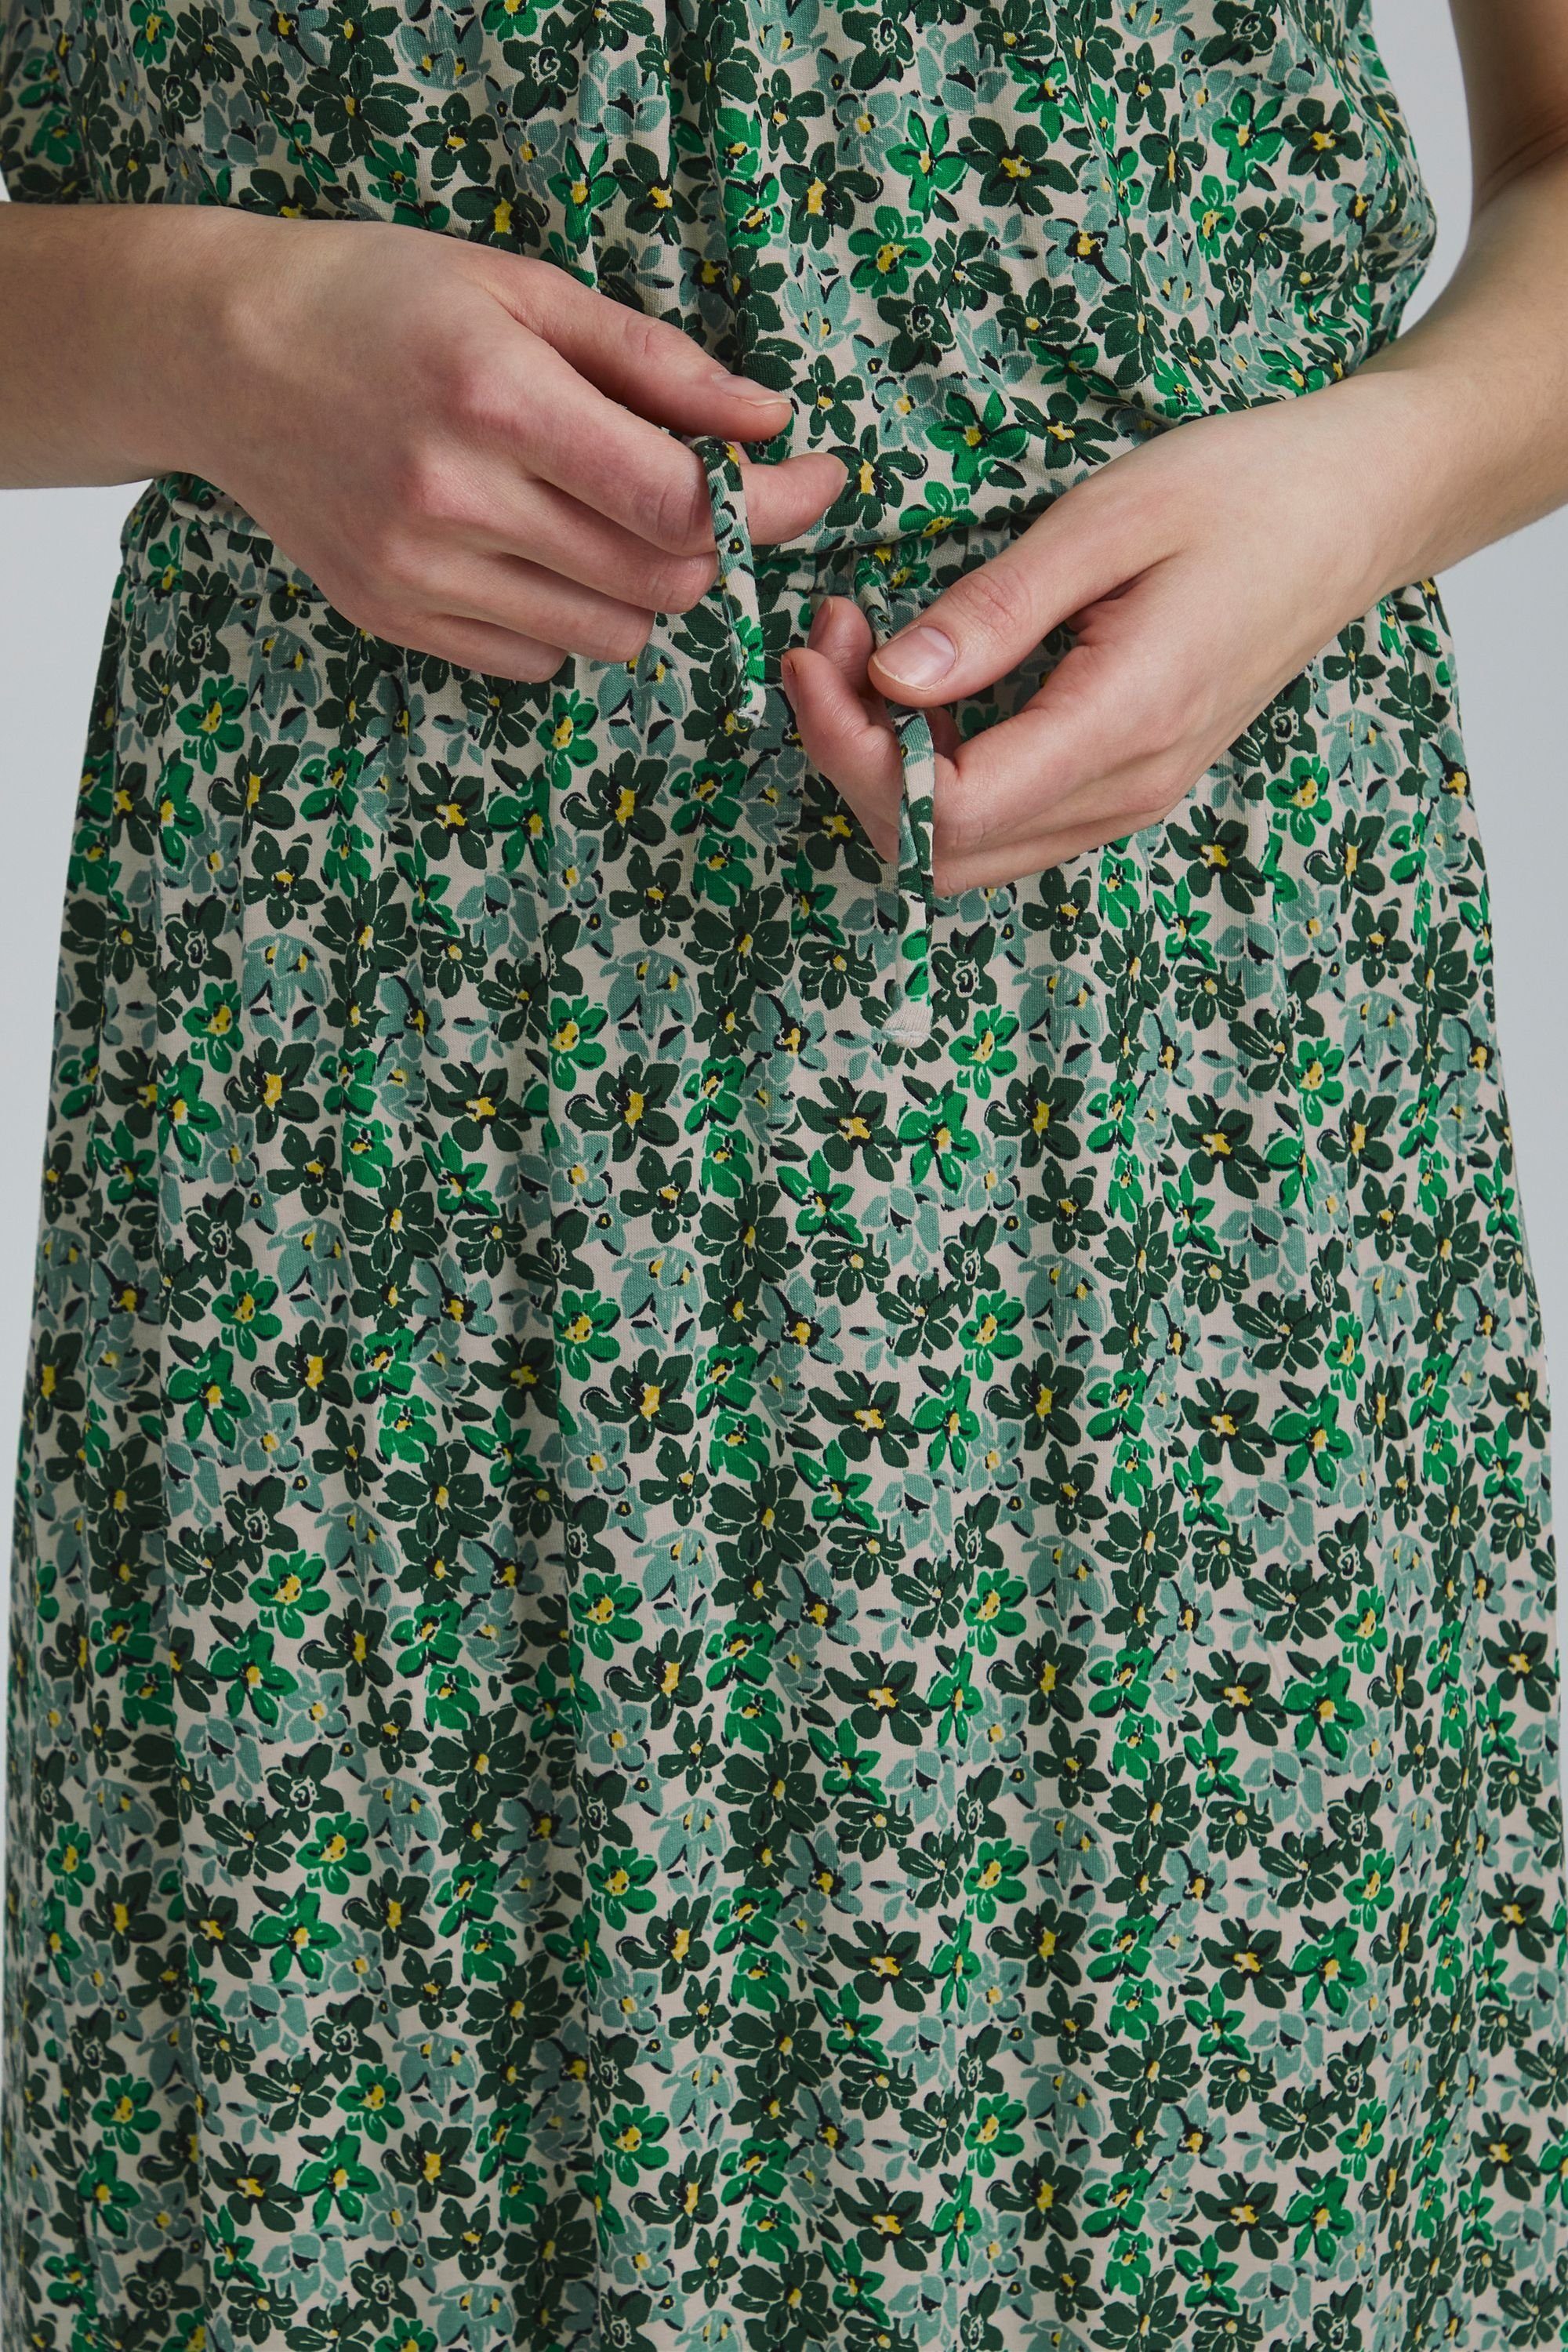 Green Dress Fransa 5 20610508 Malachite FRFEDOT mix - fransa Blusenkleid